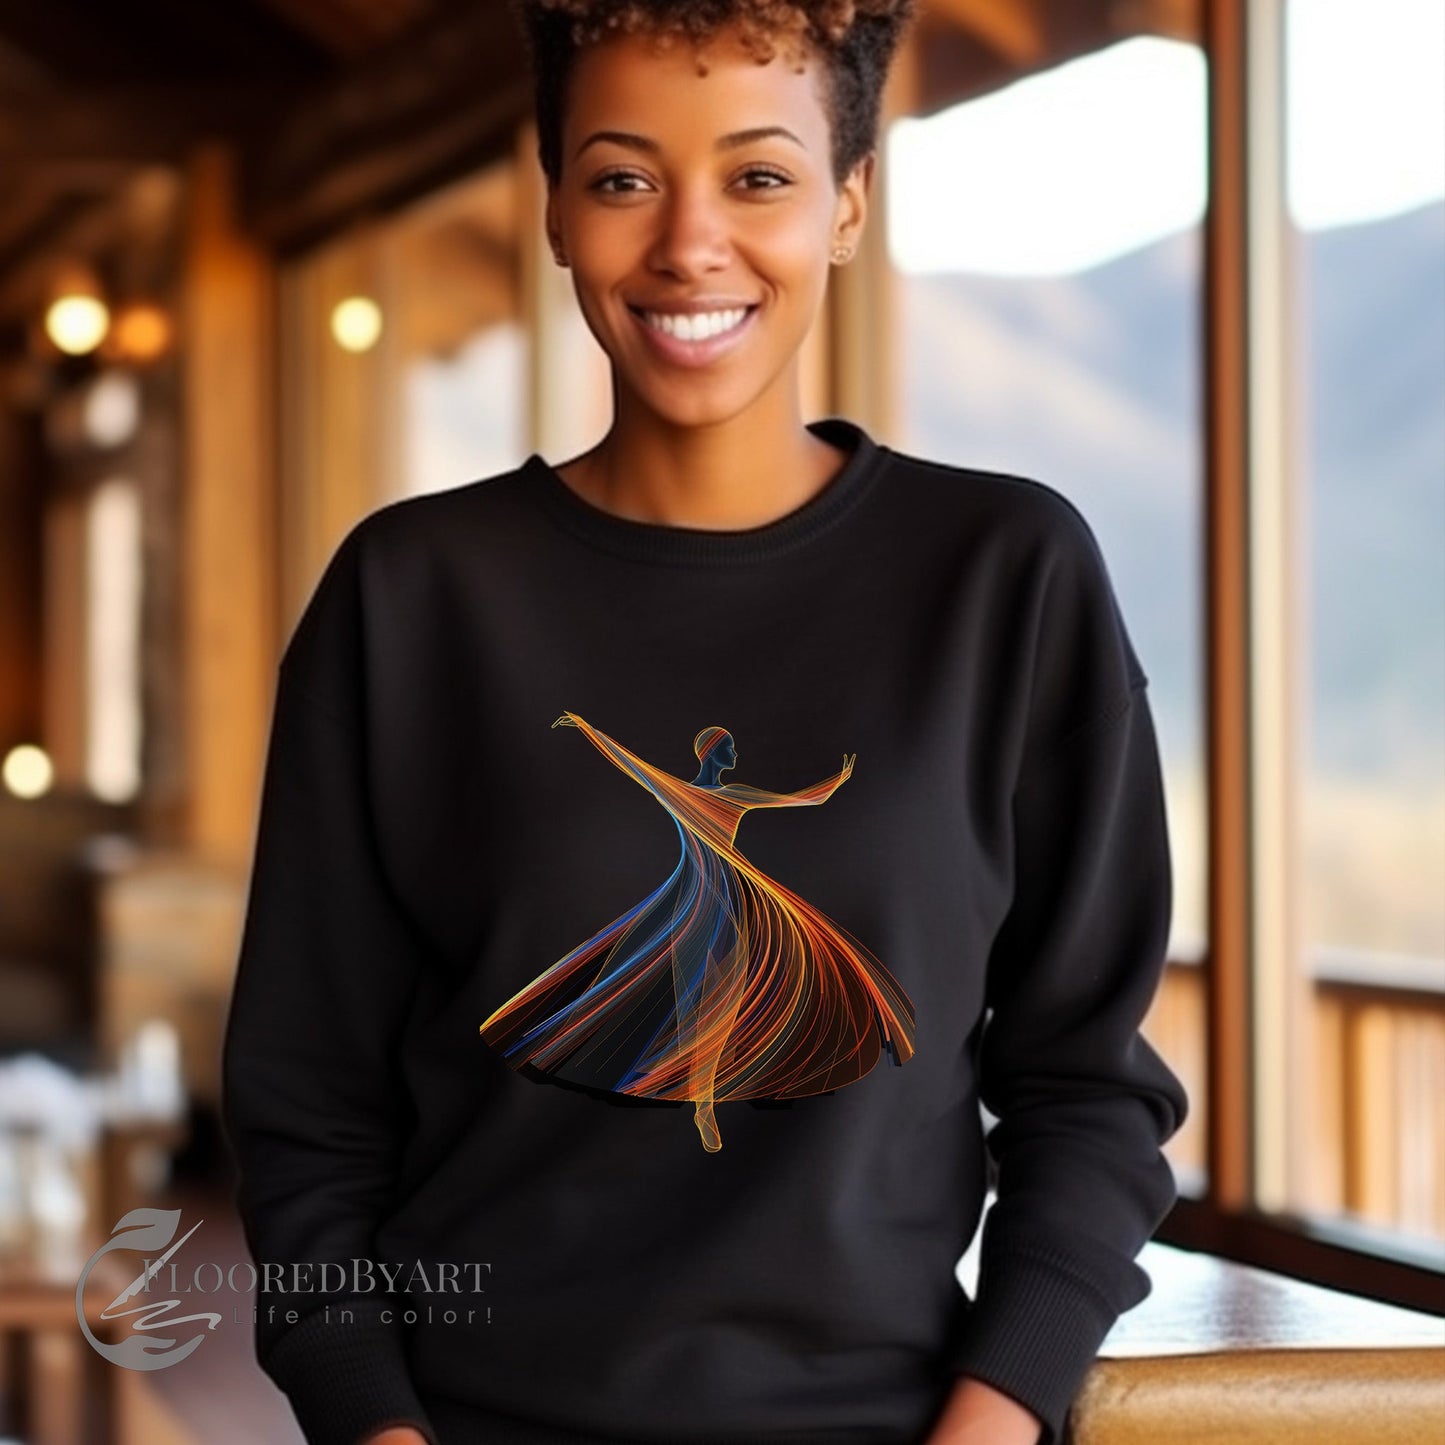 Dancer Sweatshirt - A Beautiful Dancer on Black Sweater, Brilliant Color - FlooredByArt